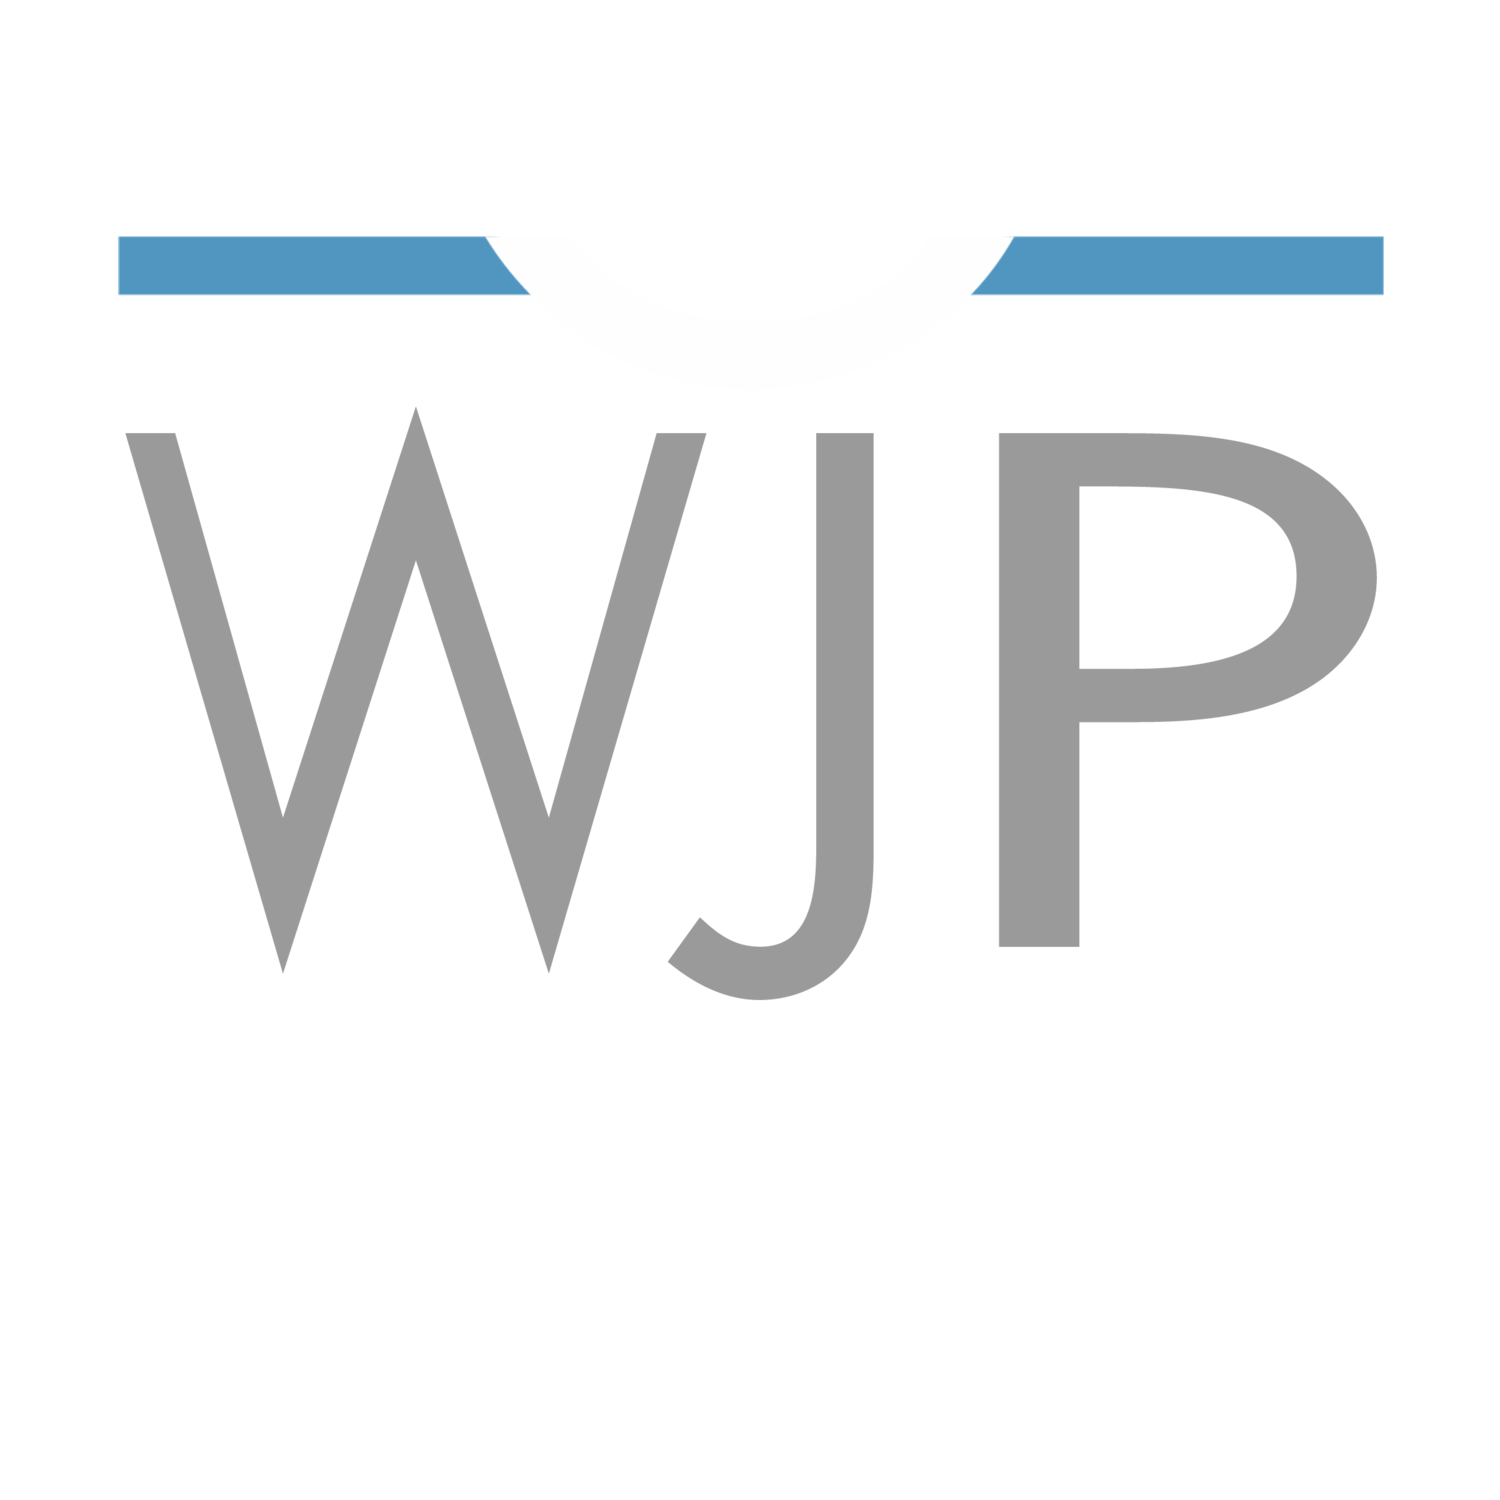 William James Photography